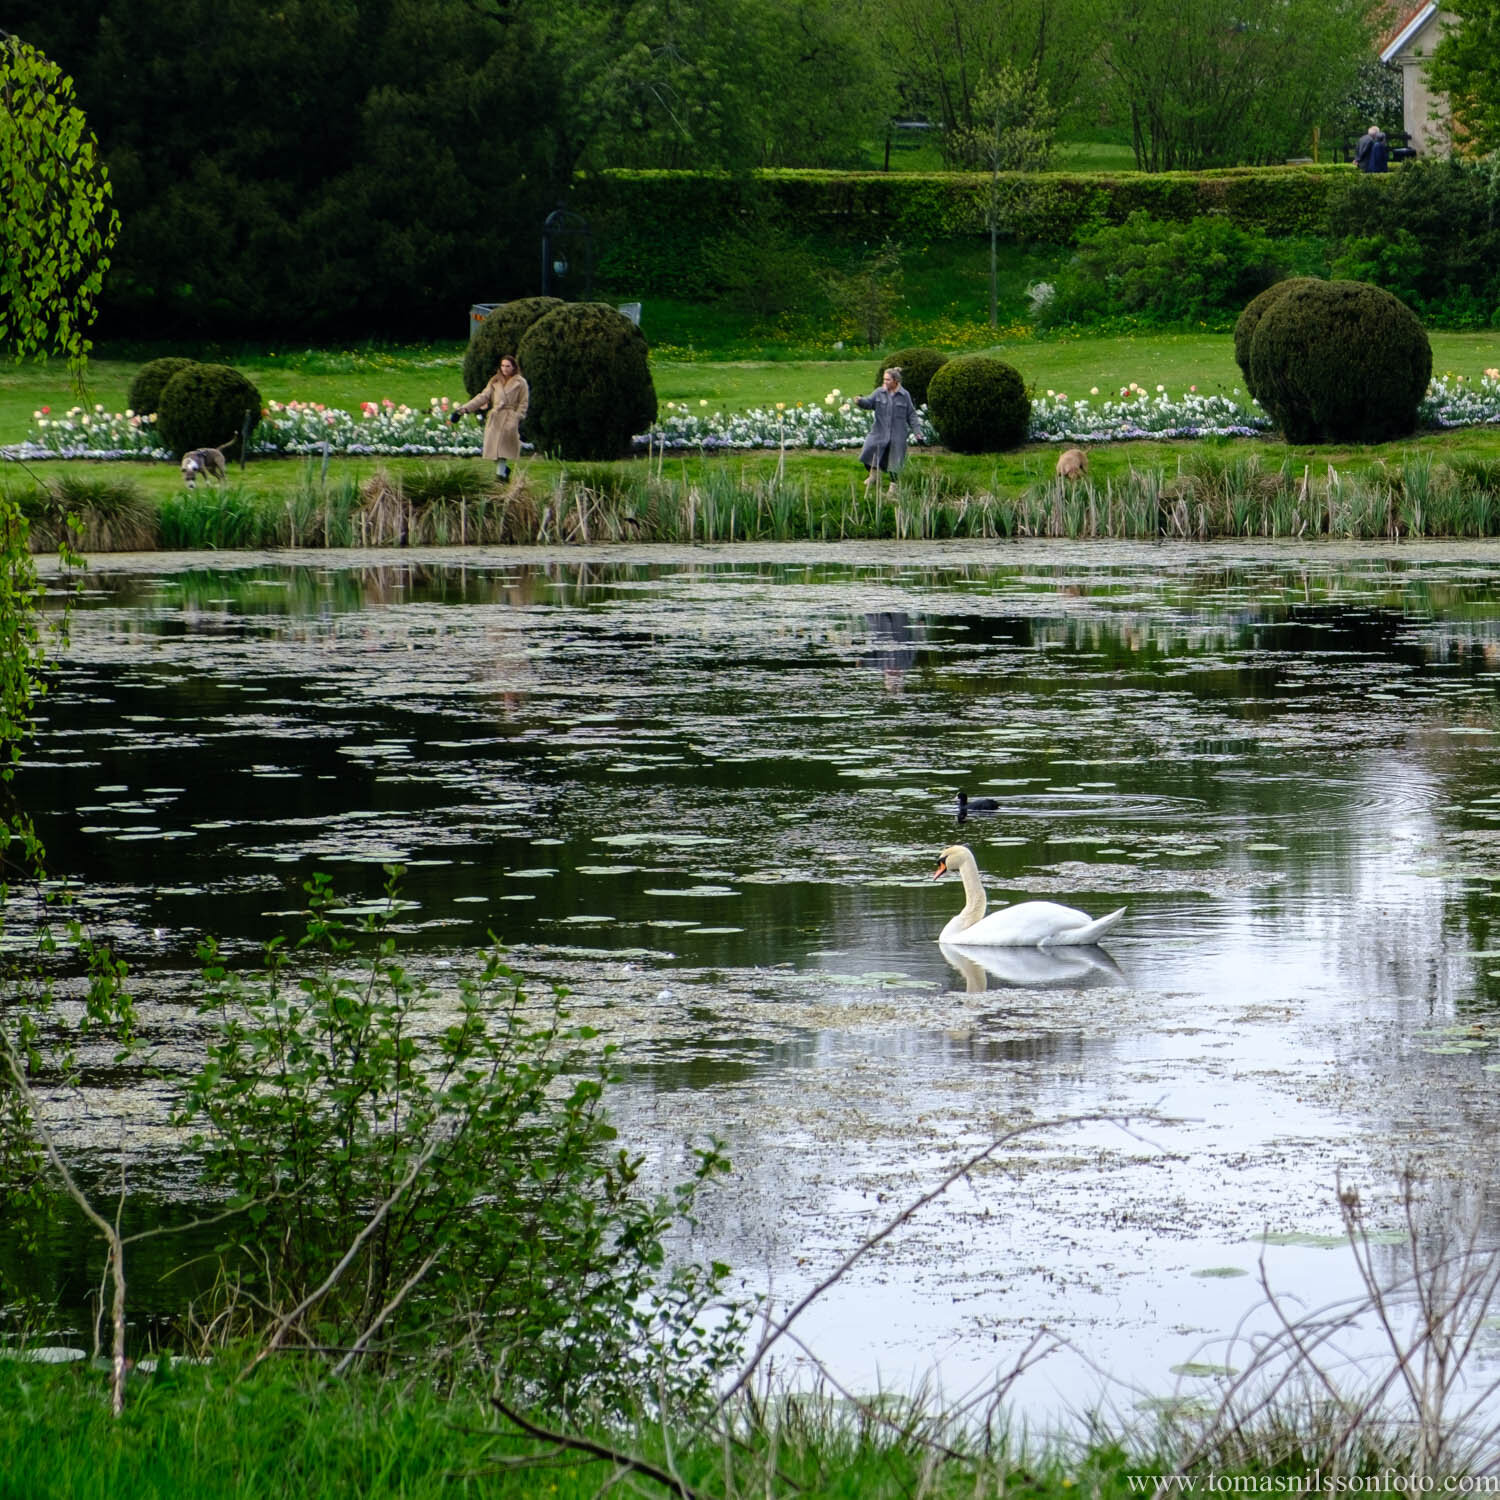 Day 184 - July 3: Swan Pond